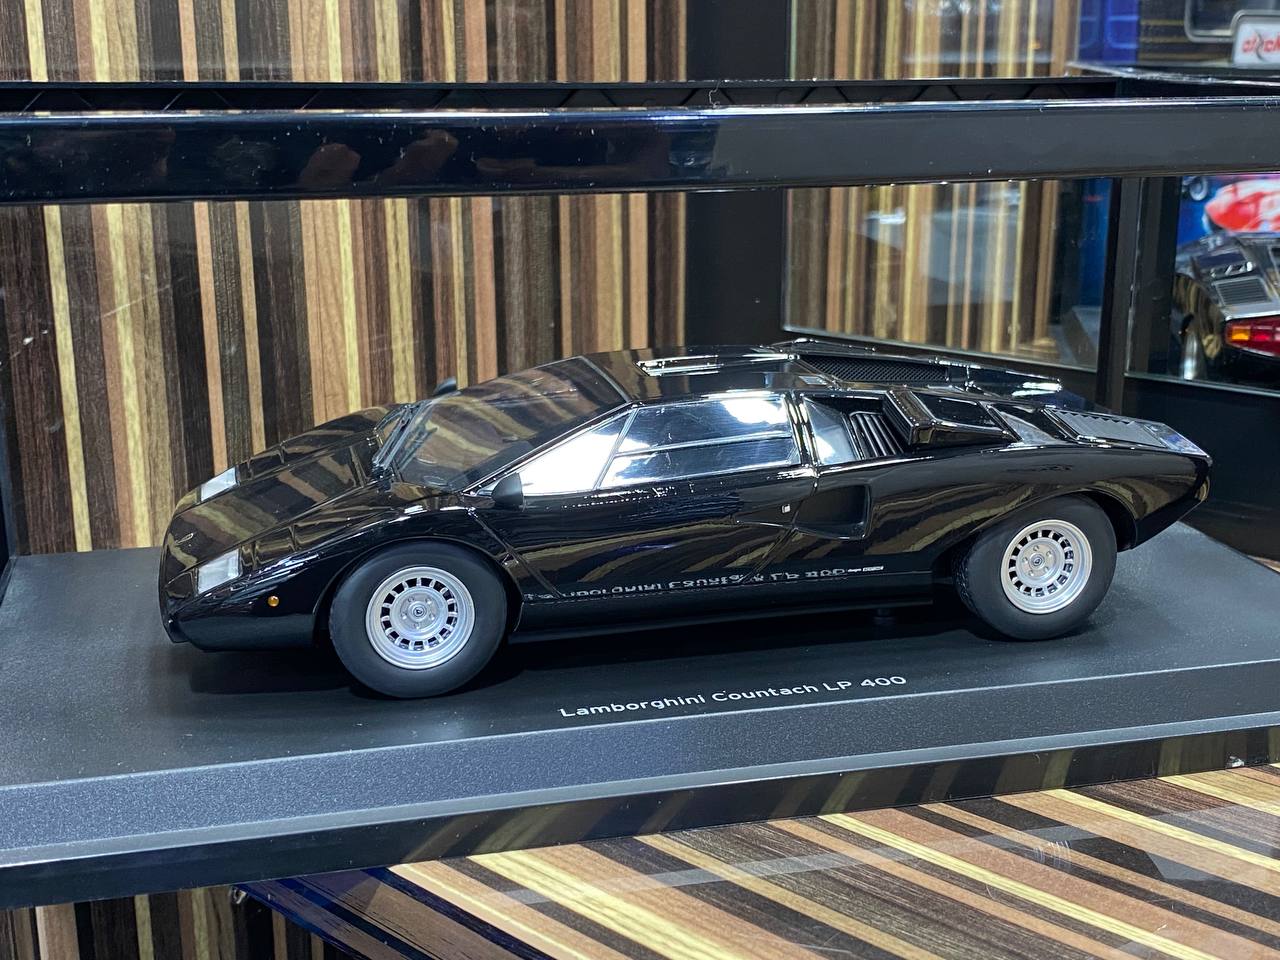 1/18 Diecast Lamborghini Countach LP 400 Black Kyosho Scale Model Car